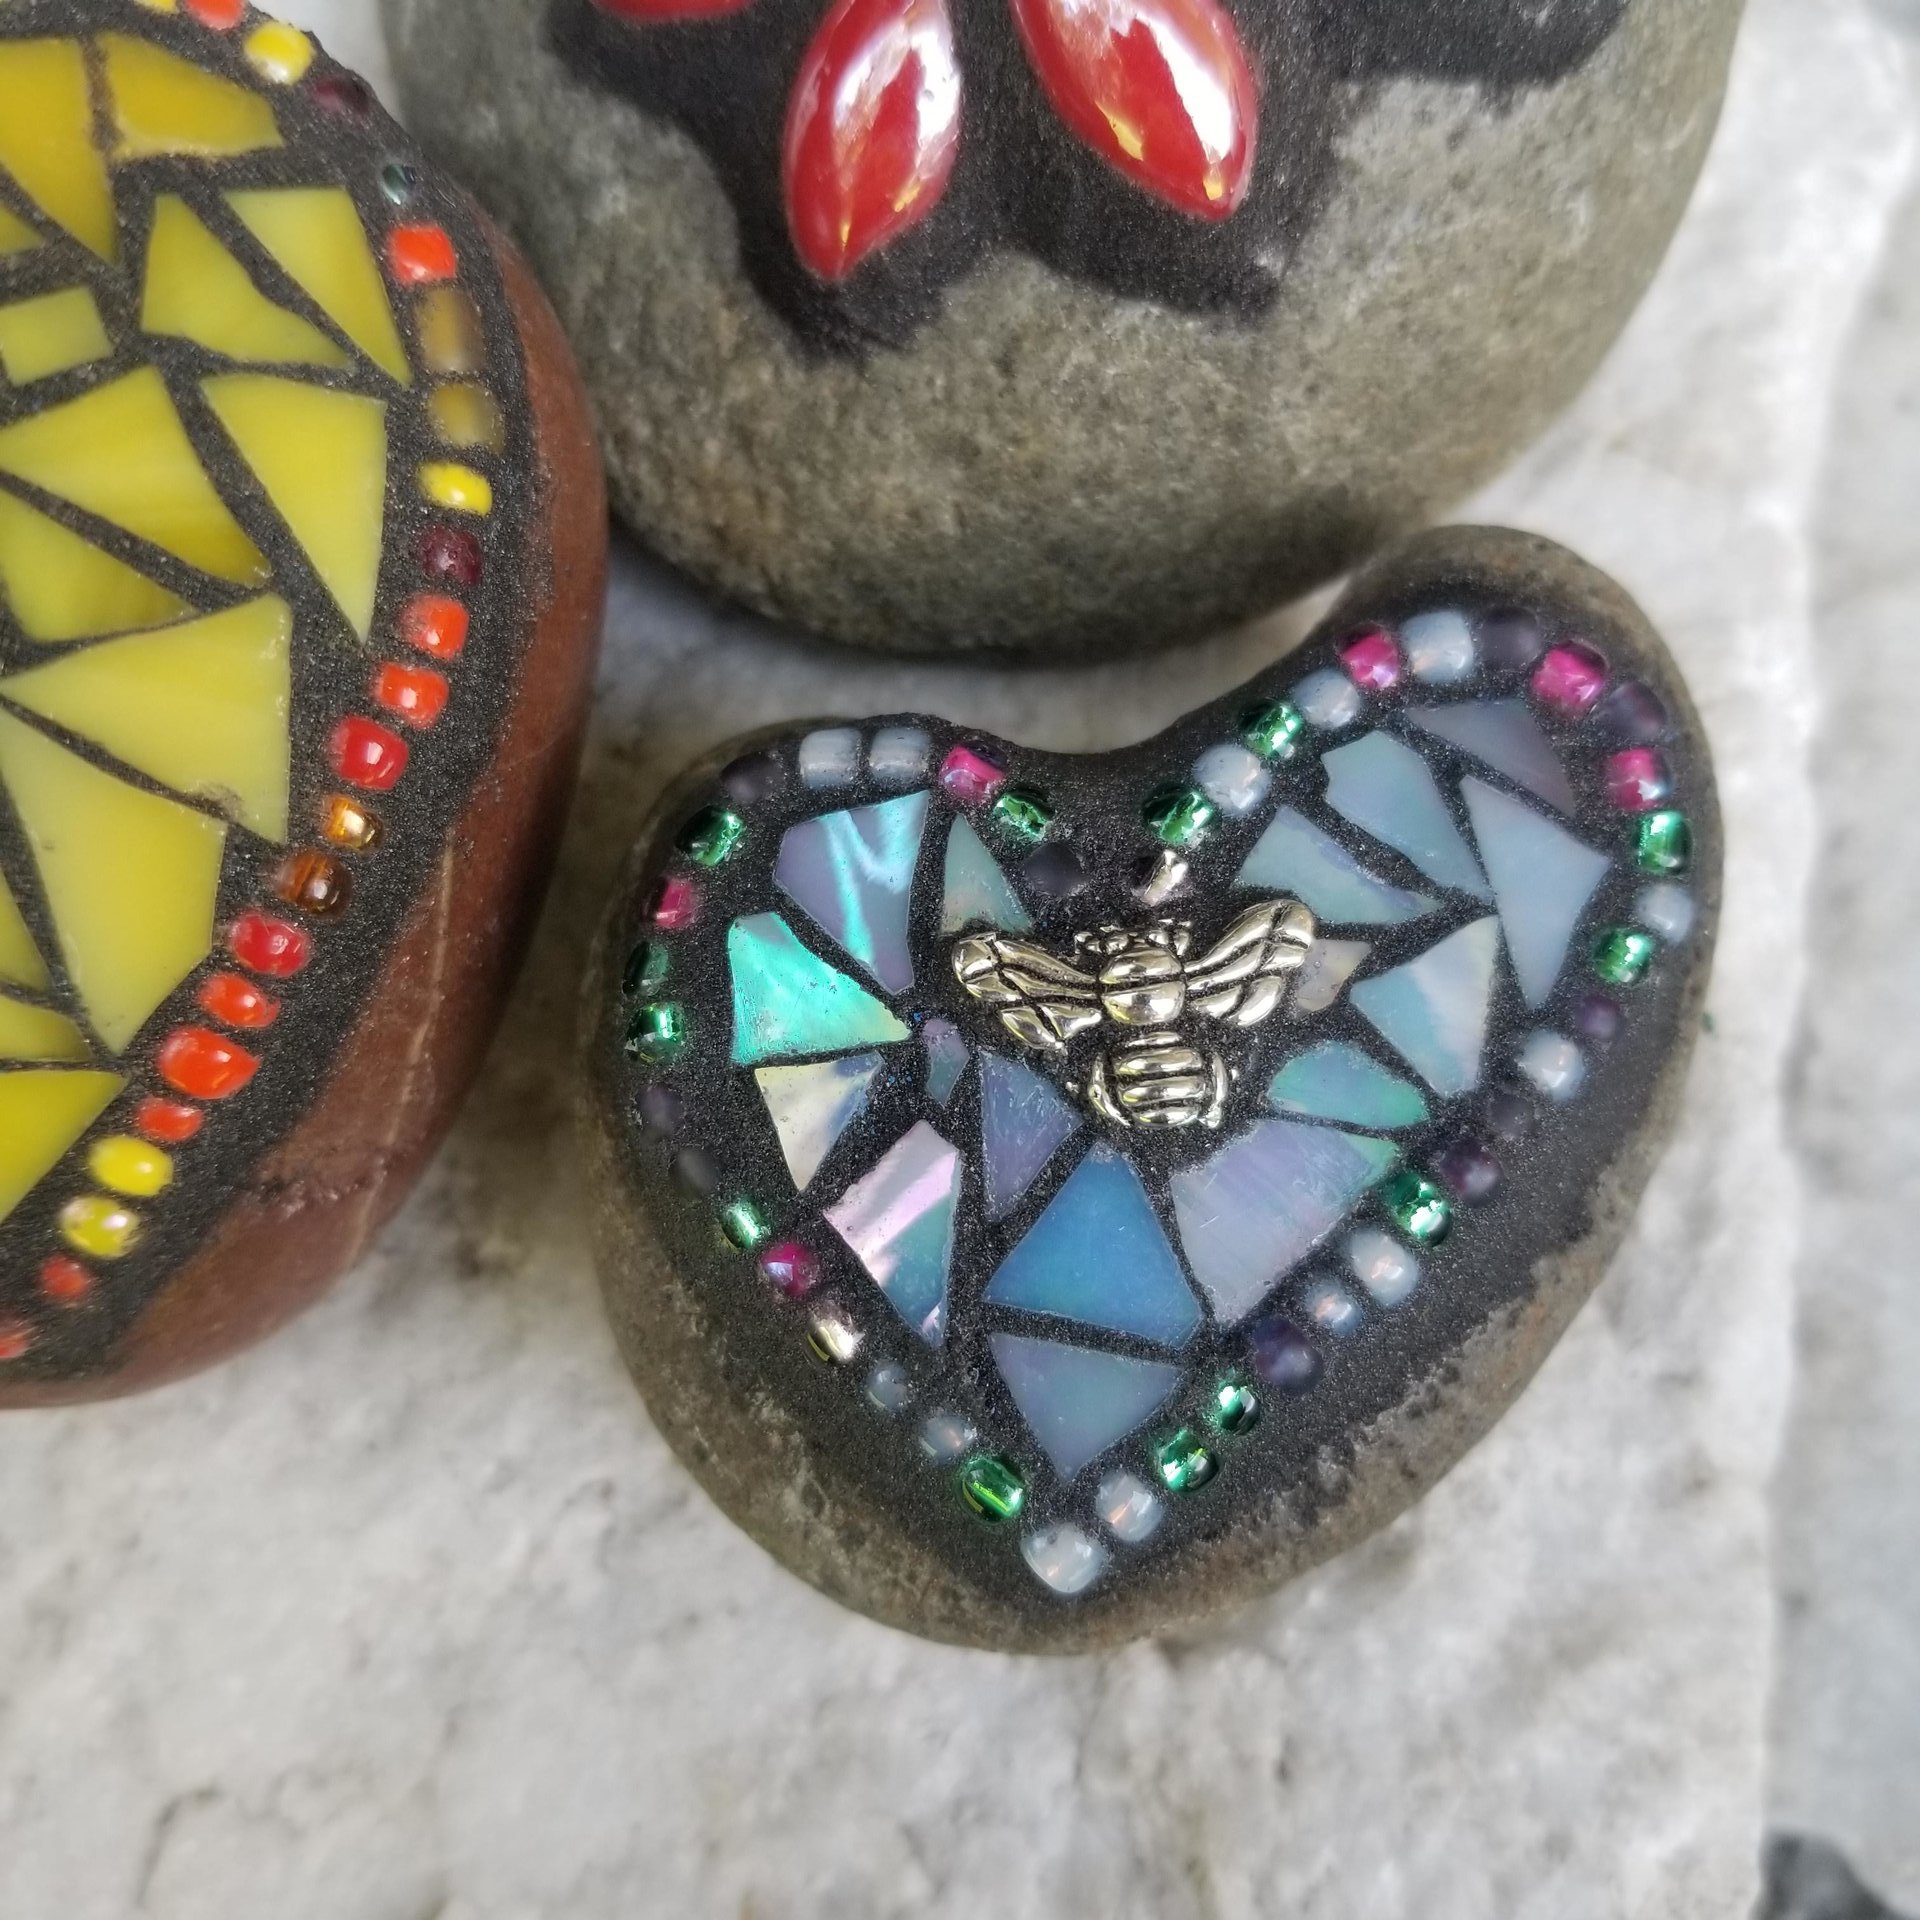 Mosaic Garden Stone Paperweights, Secret Santa Stocking Stuffer, #1 Group Mosaic Heart and Rocks 